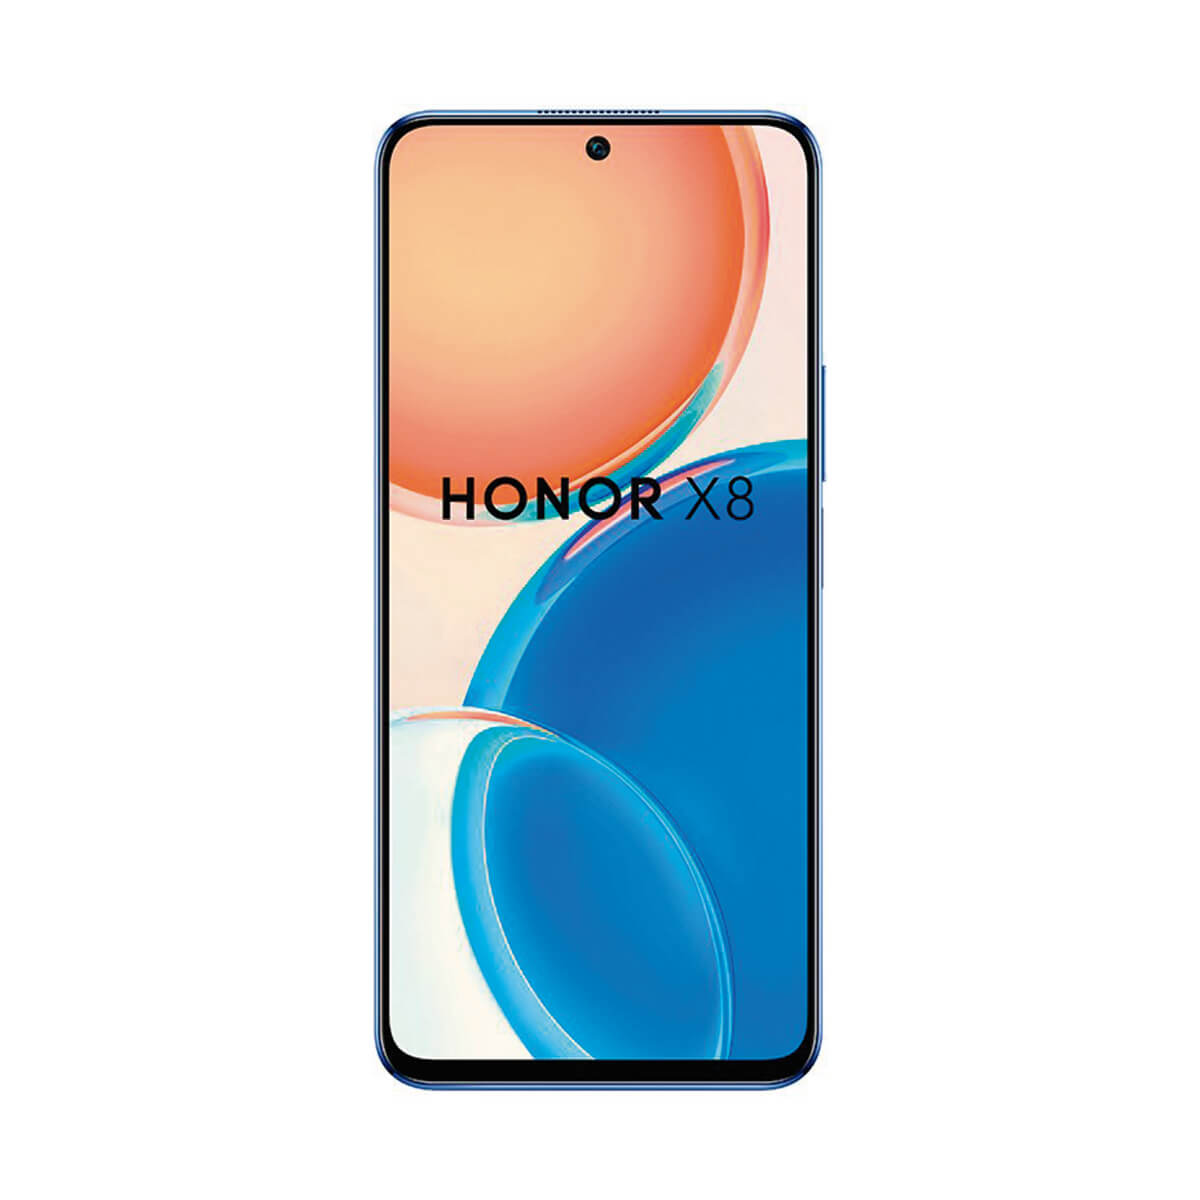 Honor X8 6GB/128GB Azul (Ocean Blue) Dual SIM TFY-LX1 – DESPRECINTADO